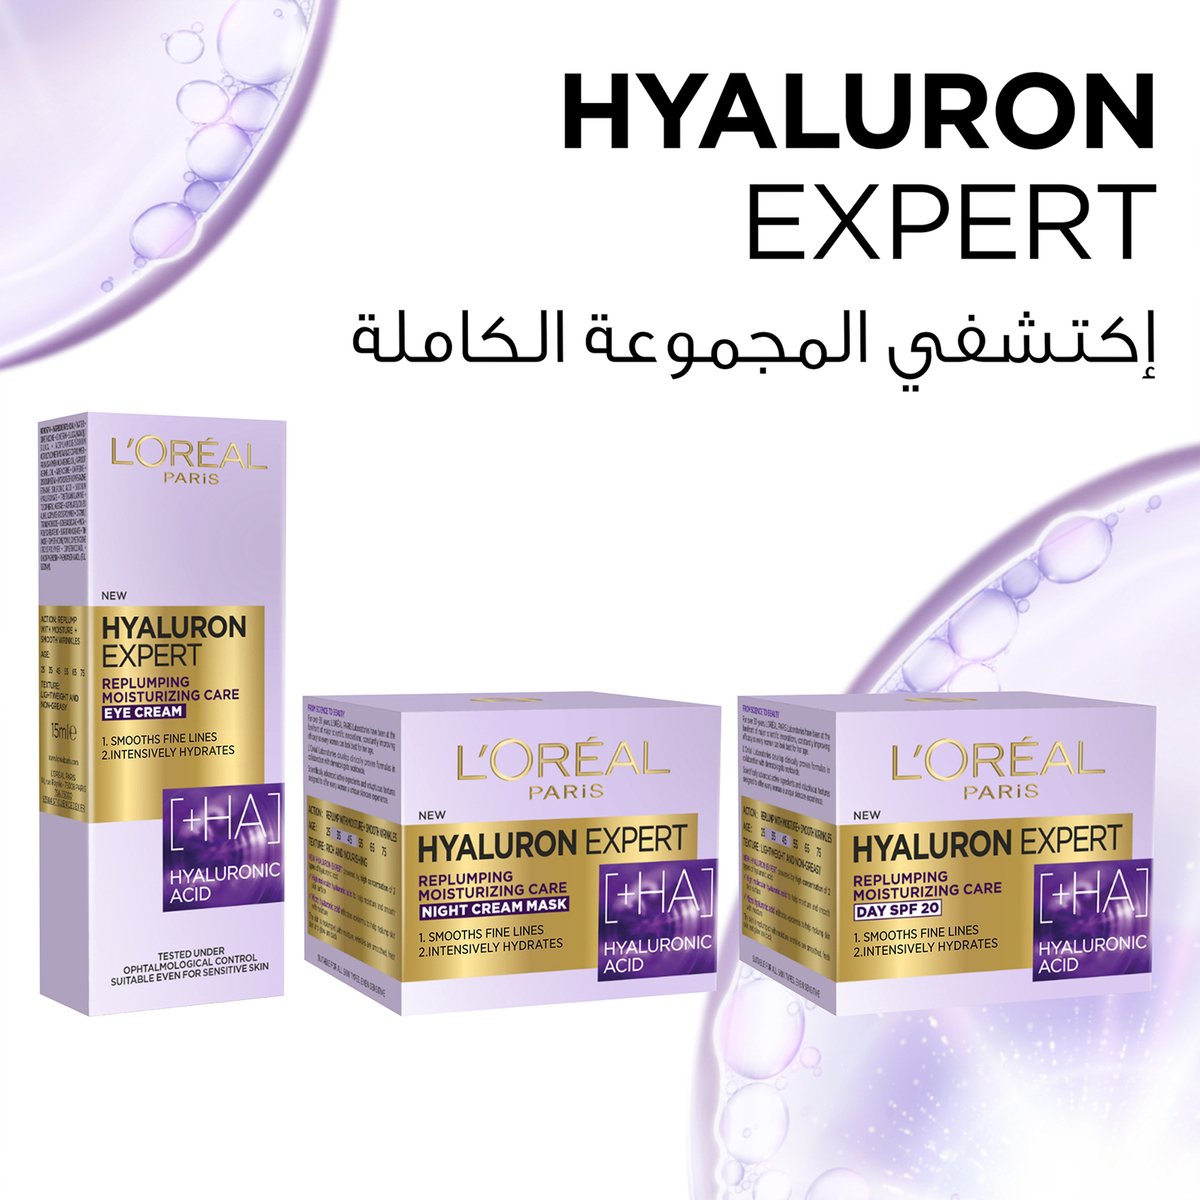 L'Oreal Hyaluron Expert Night Cream Mask 50 ml